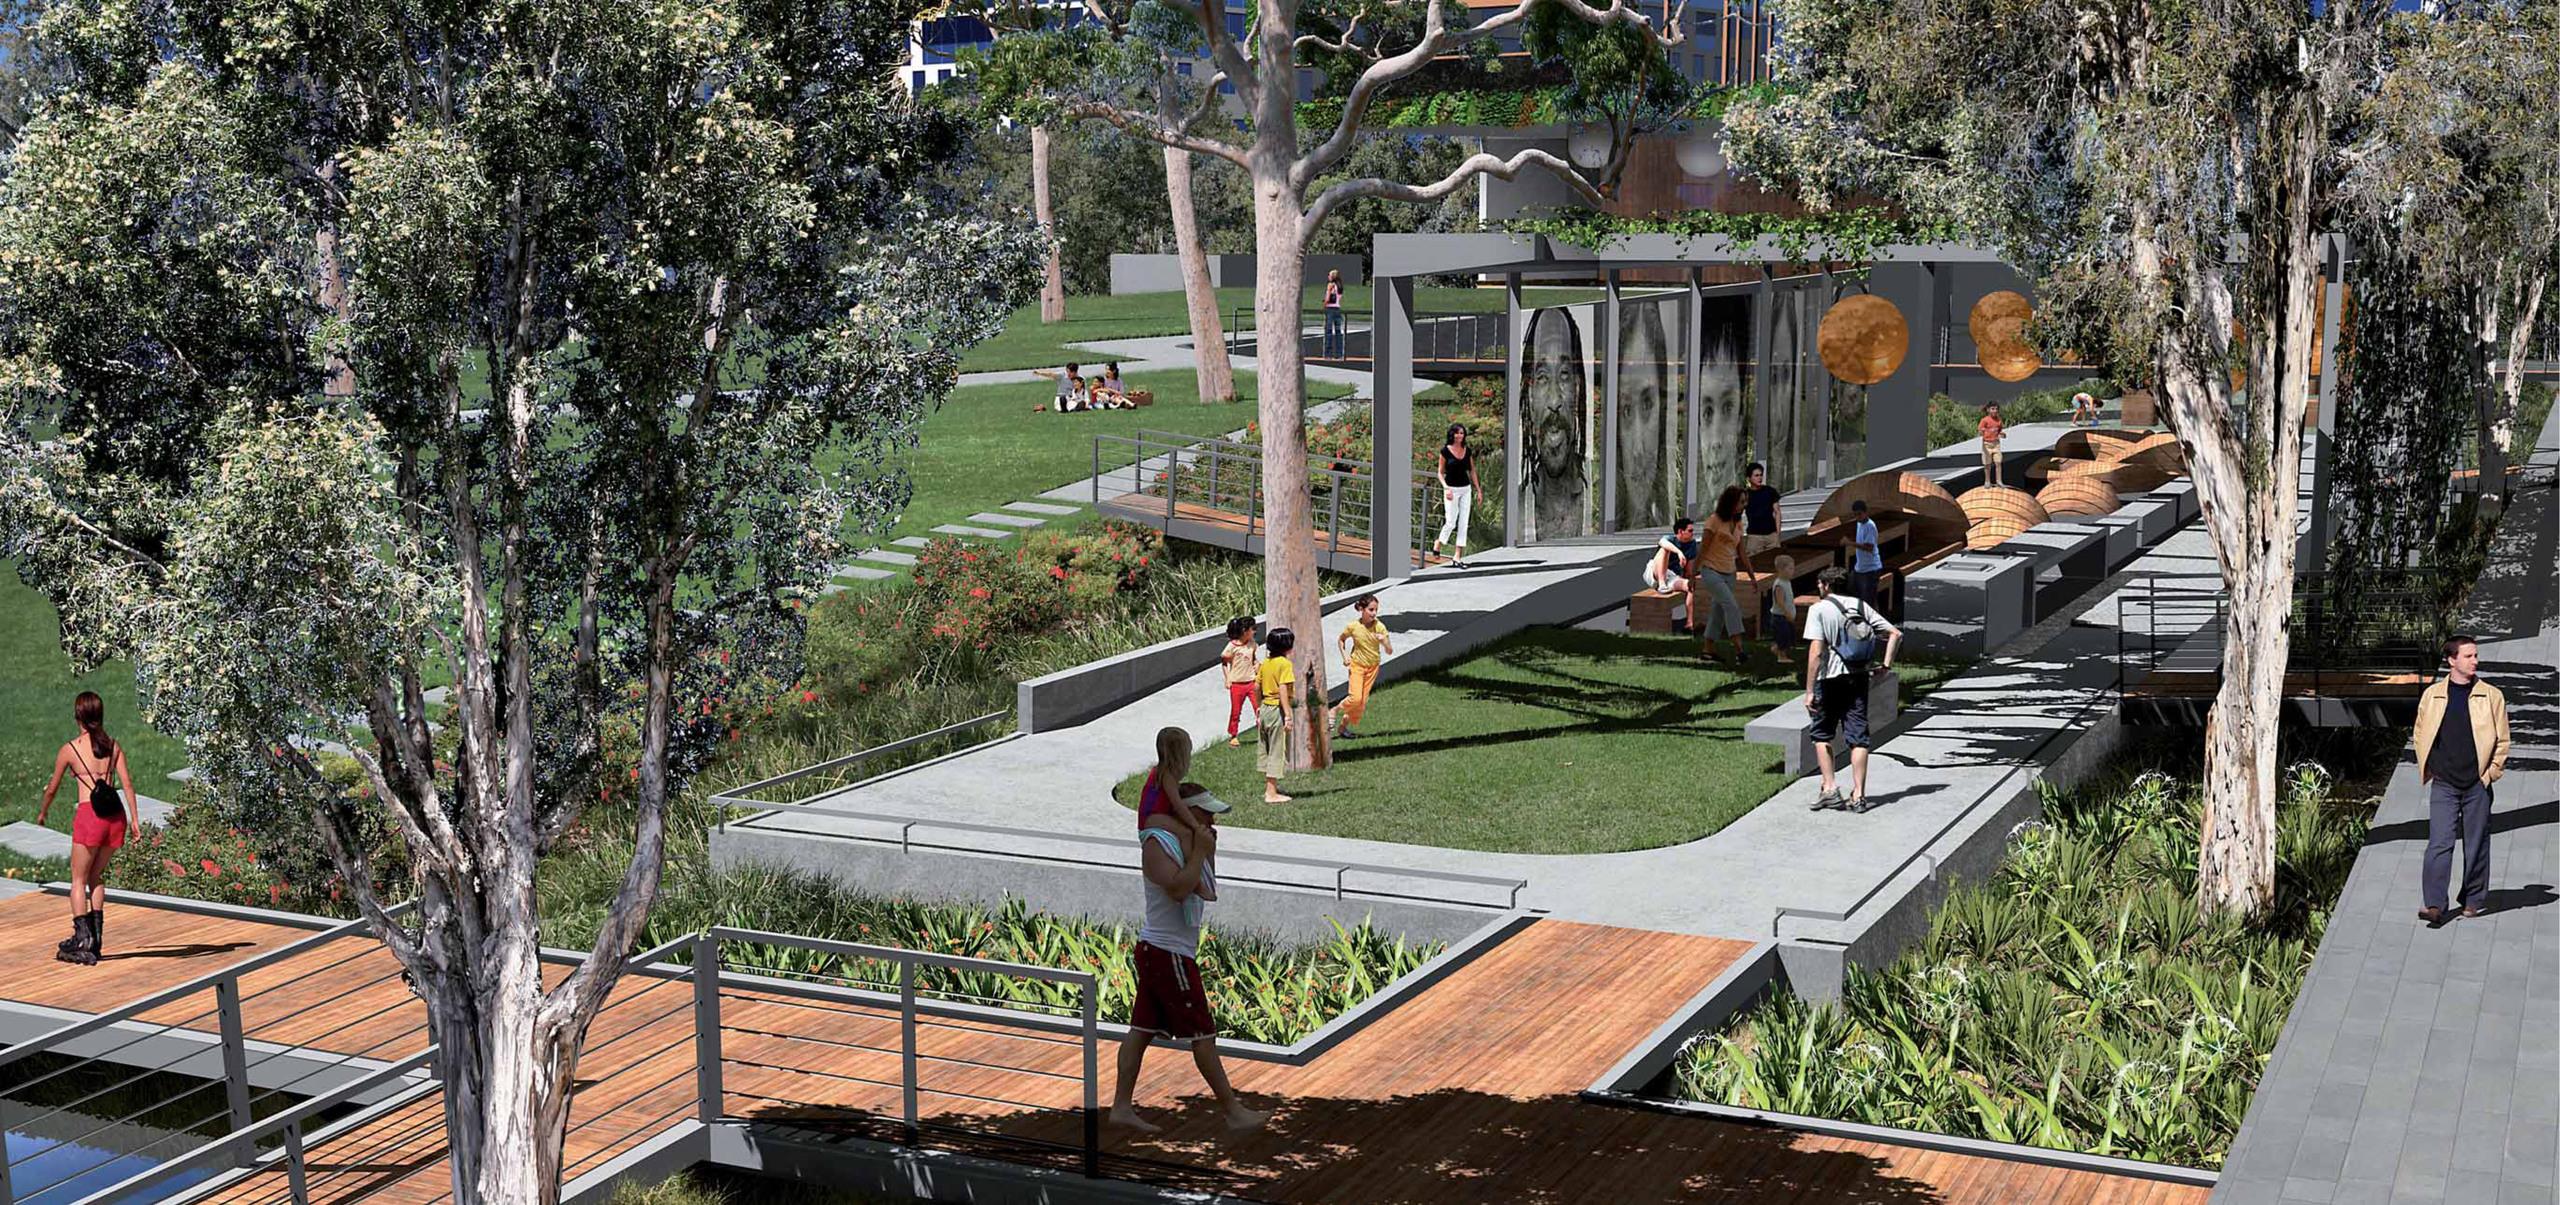 A concept design for Green Square, Sydney